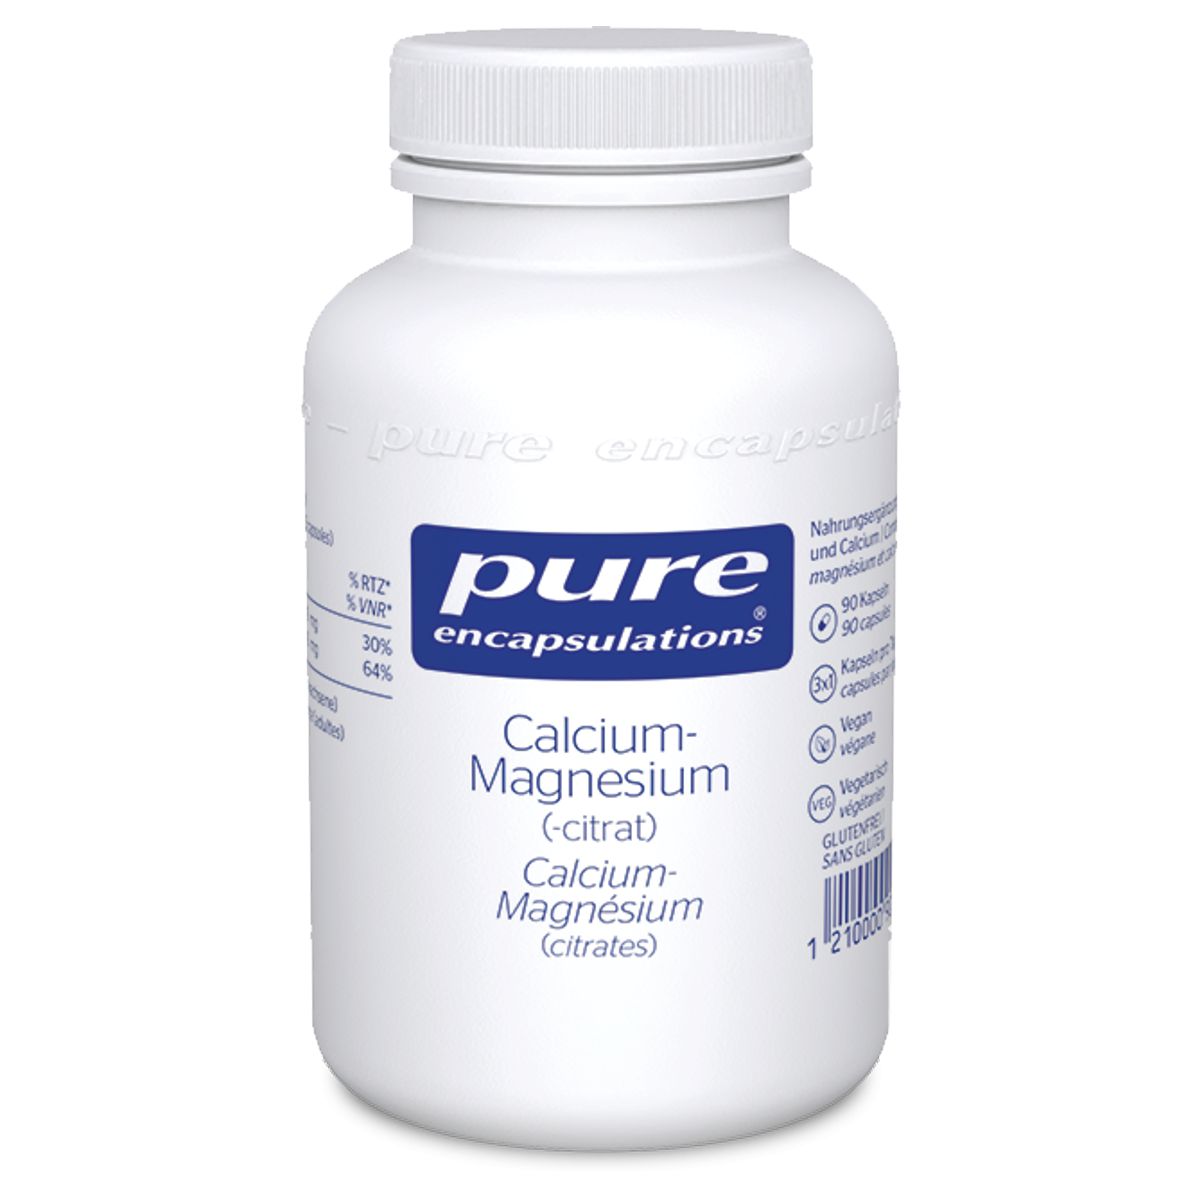 Pure Calcium-Magnesium (citrat) - Gut bioverfügbare Mineralstoff-Kombination